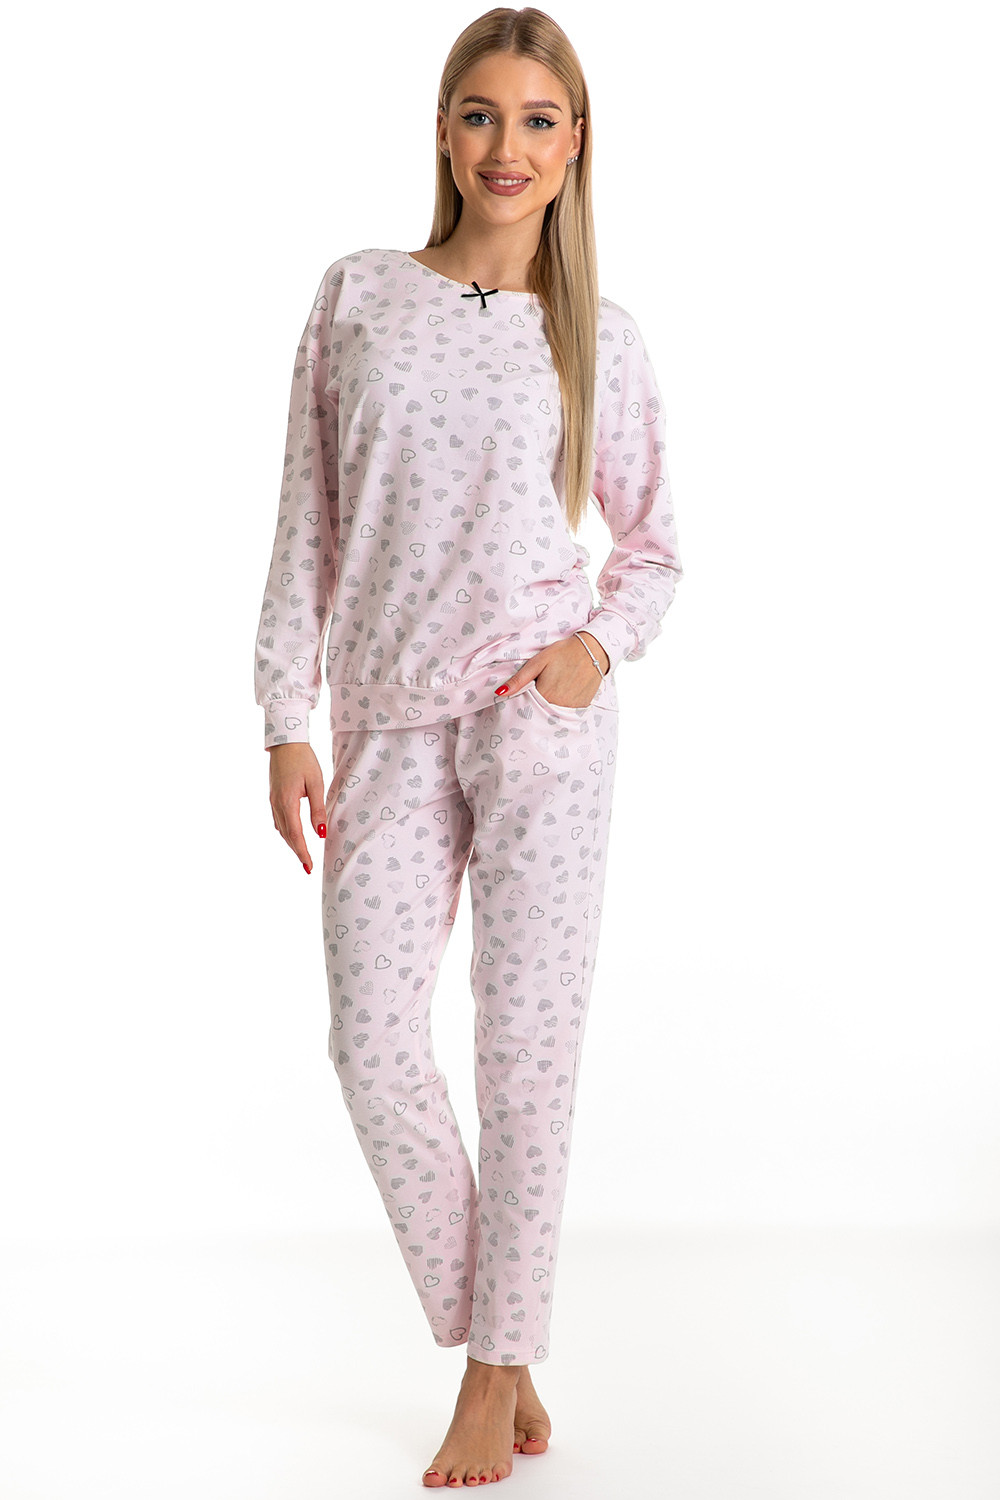 Dámské pyžamo PDD-41 růžové - Piu Bella 40